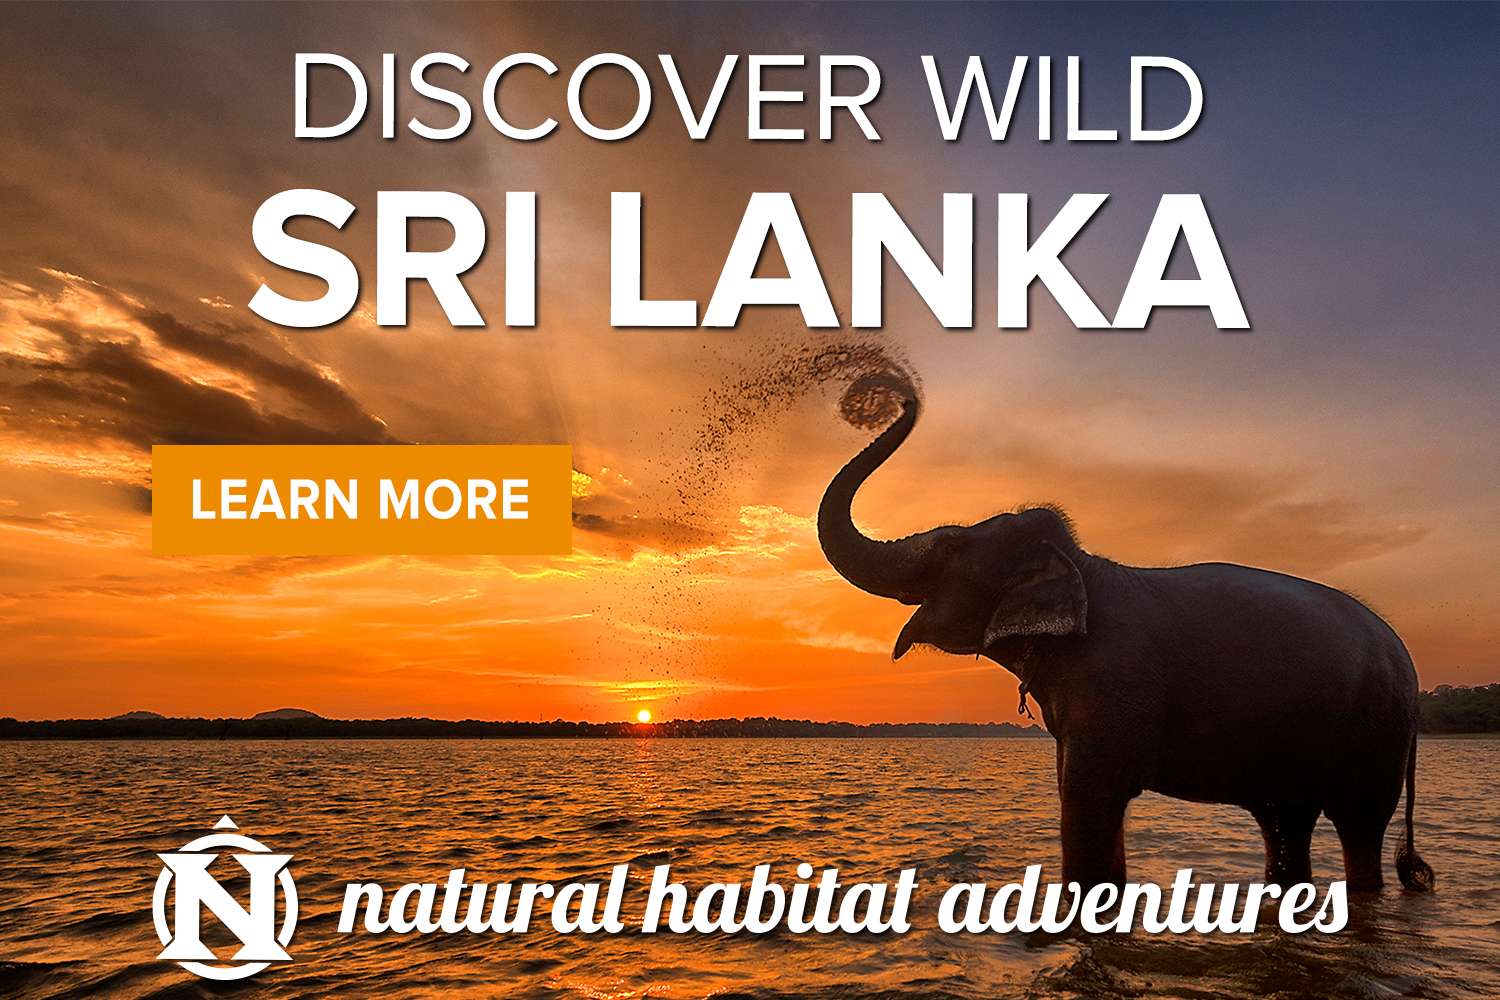 Explore Wild Sri Lanka